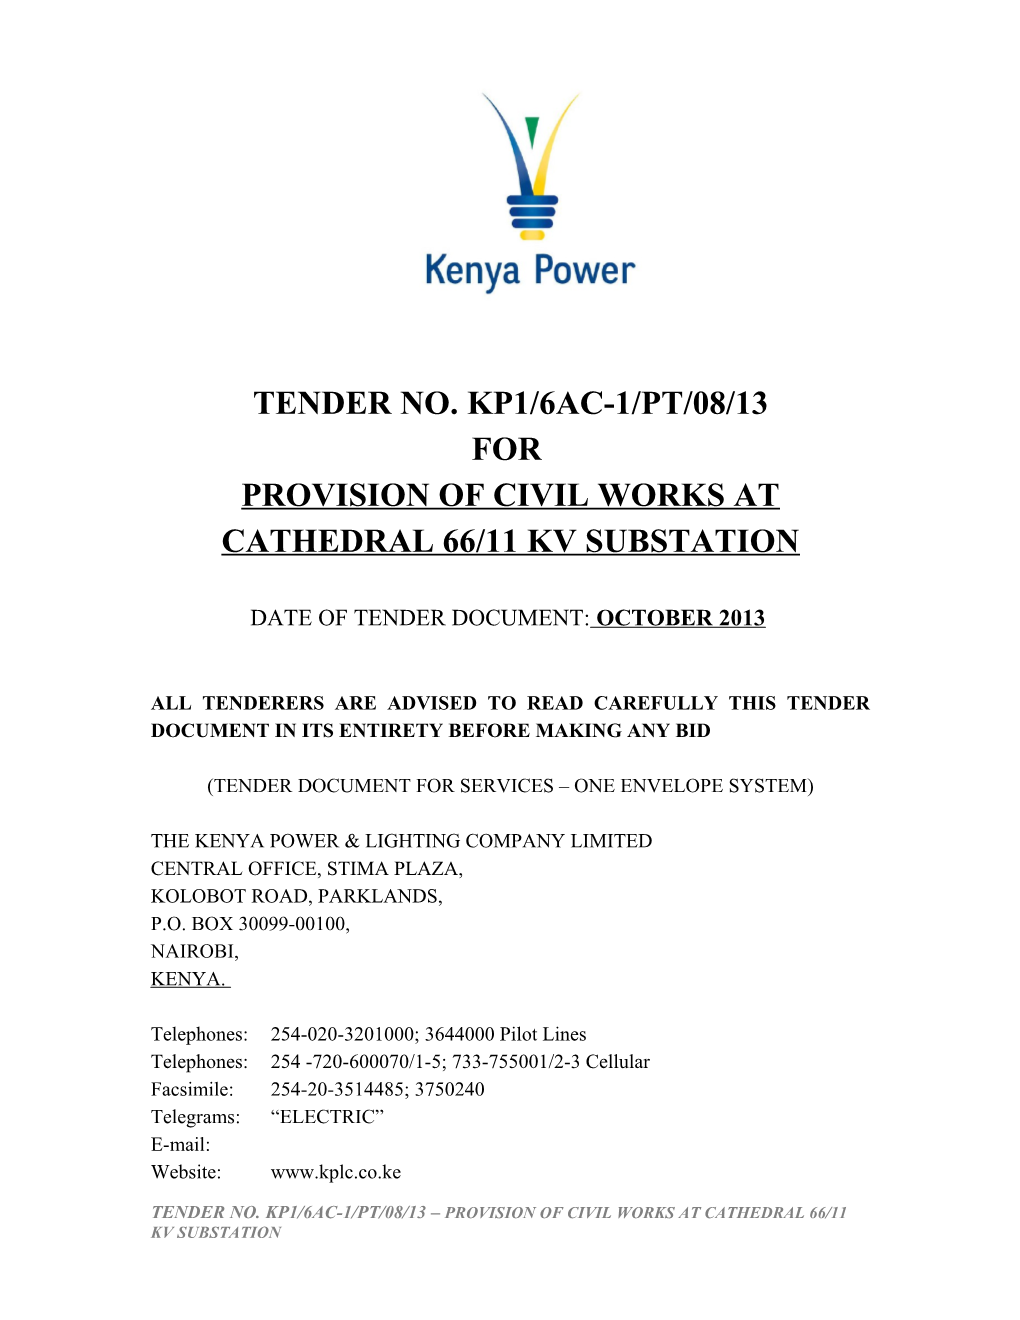 Provision of Civil Works at Cathedral 66/11 Kv Substation